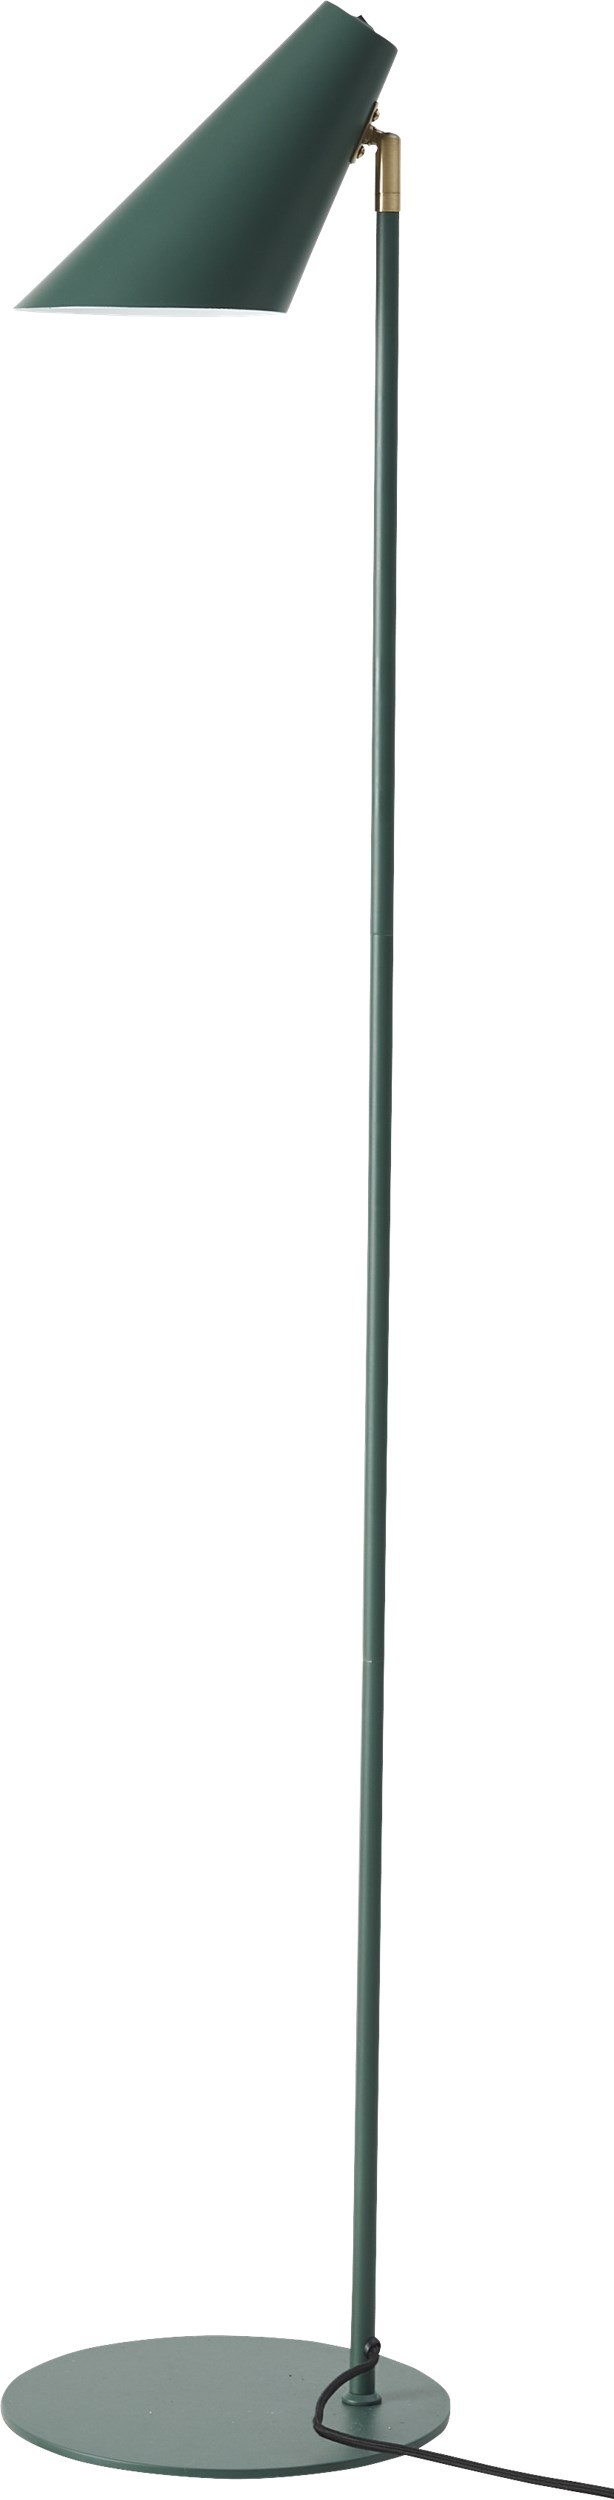 Cale Golvlampa 135 x 15,5 cm - Grön metallskärm/bas, stång i grönt/mässing och svart textilsladd